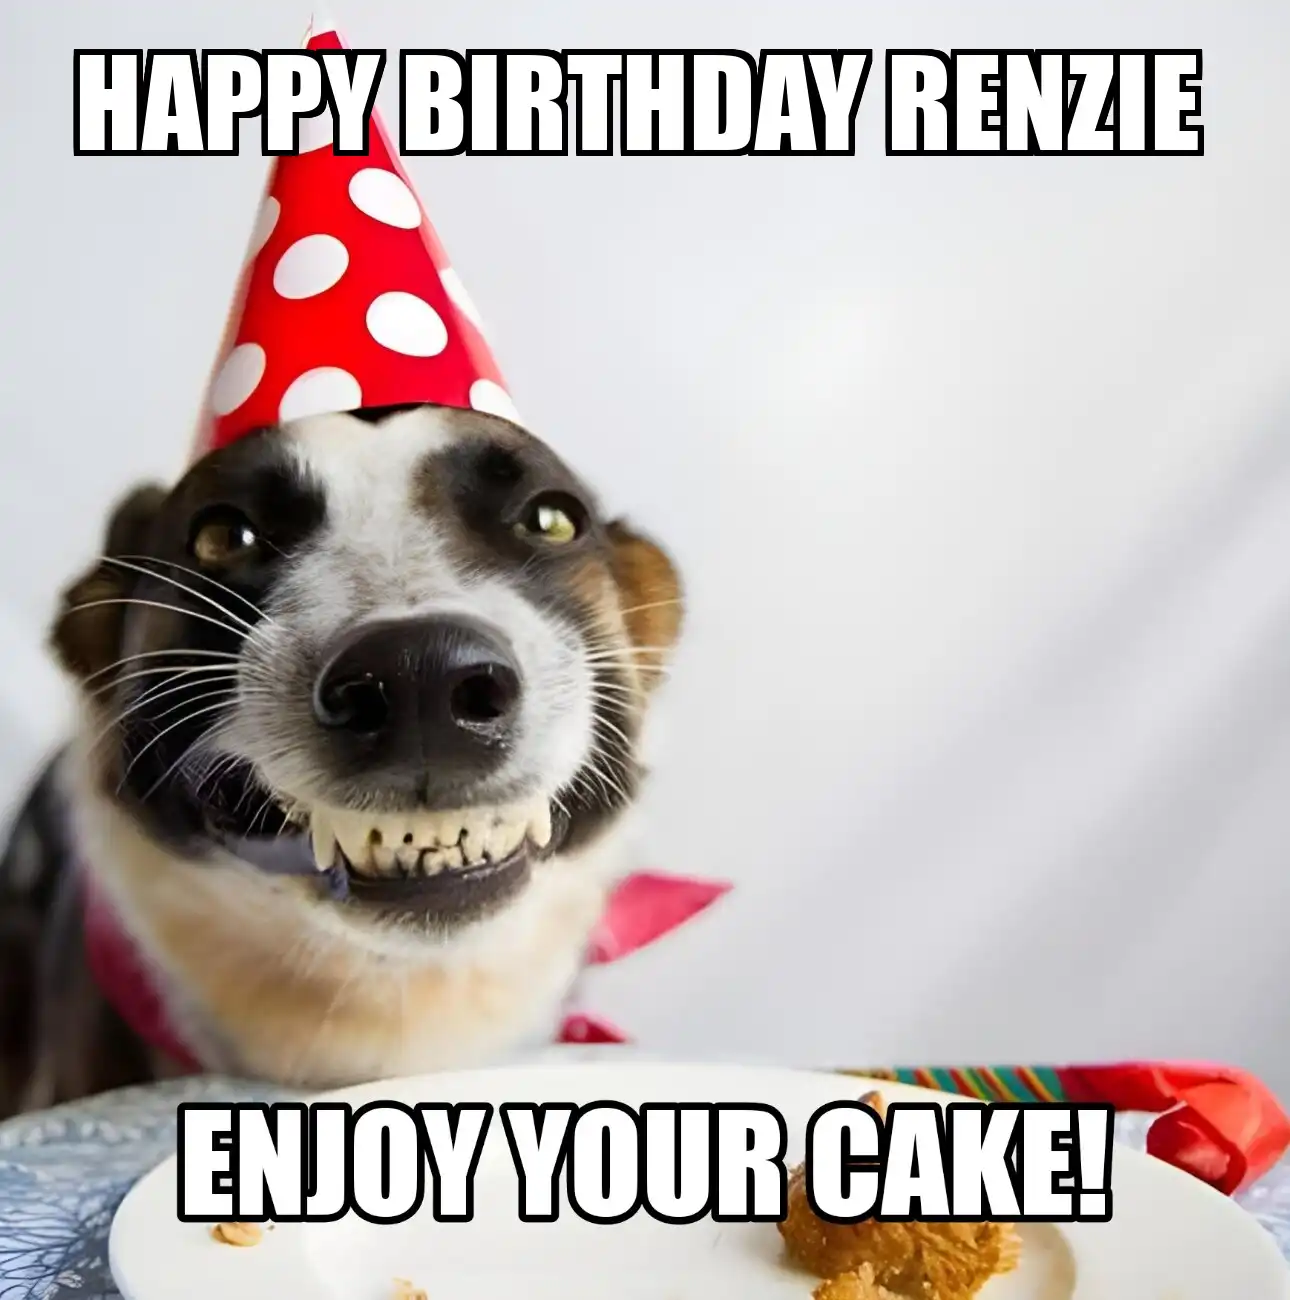 Happy Birthday Renzie Enjoy Your Cake Dog Meme